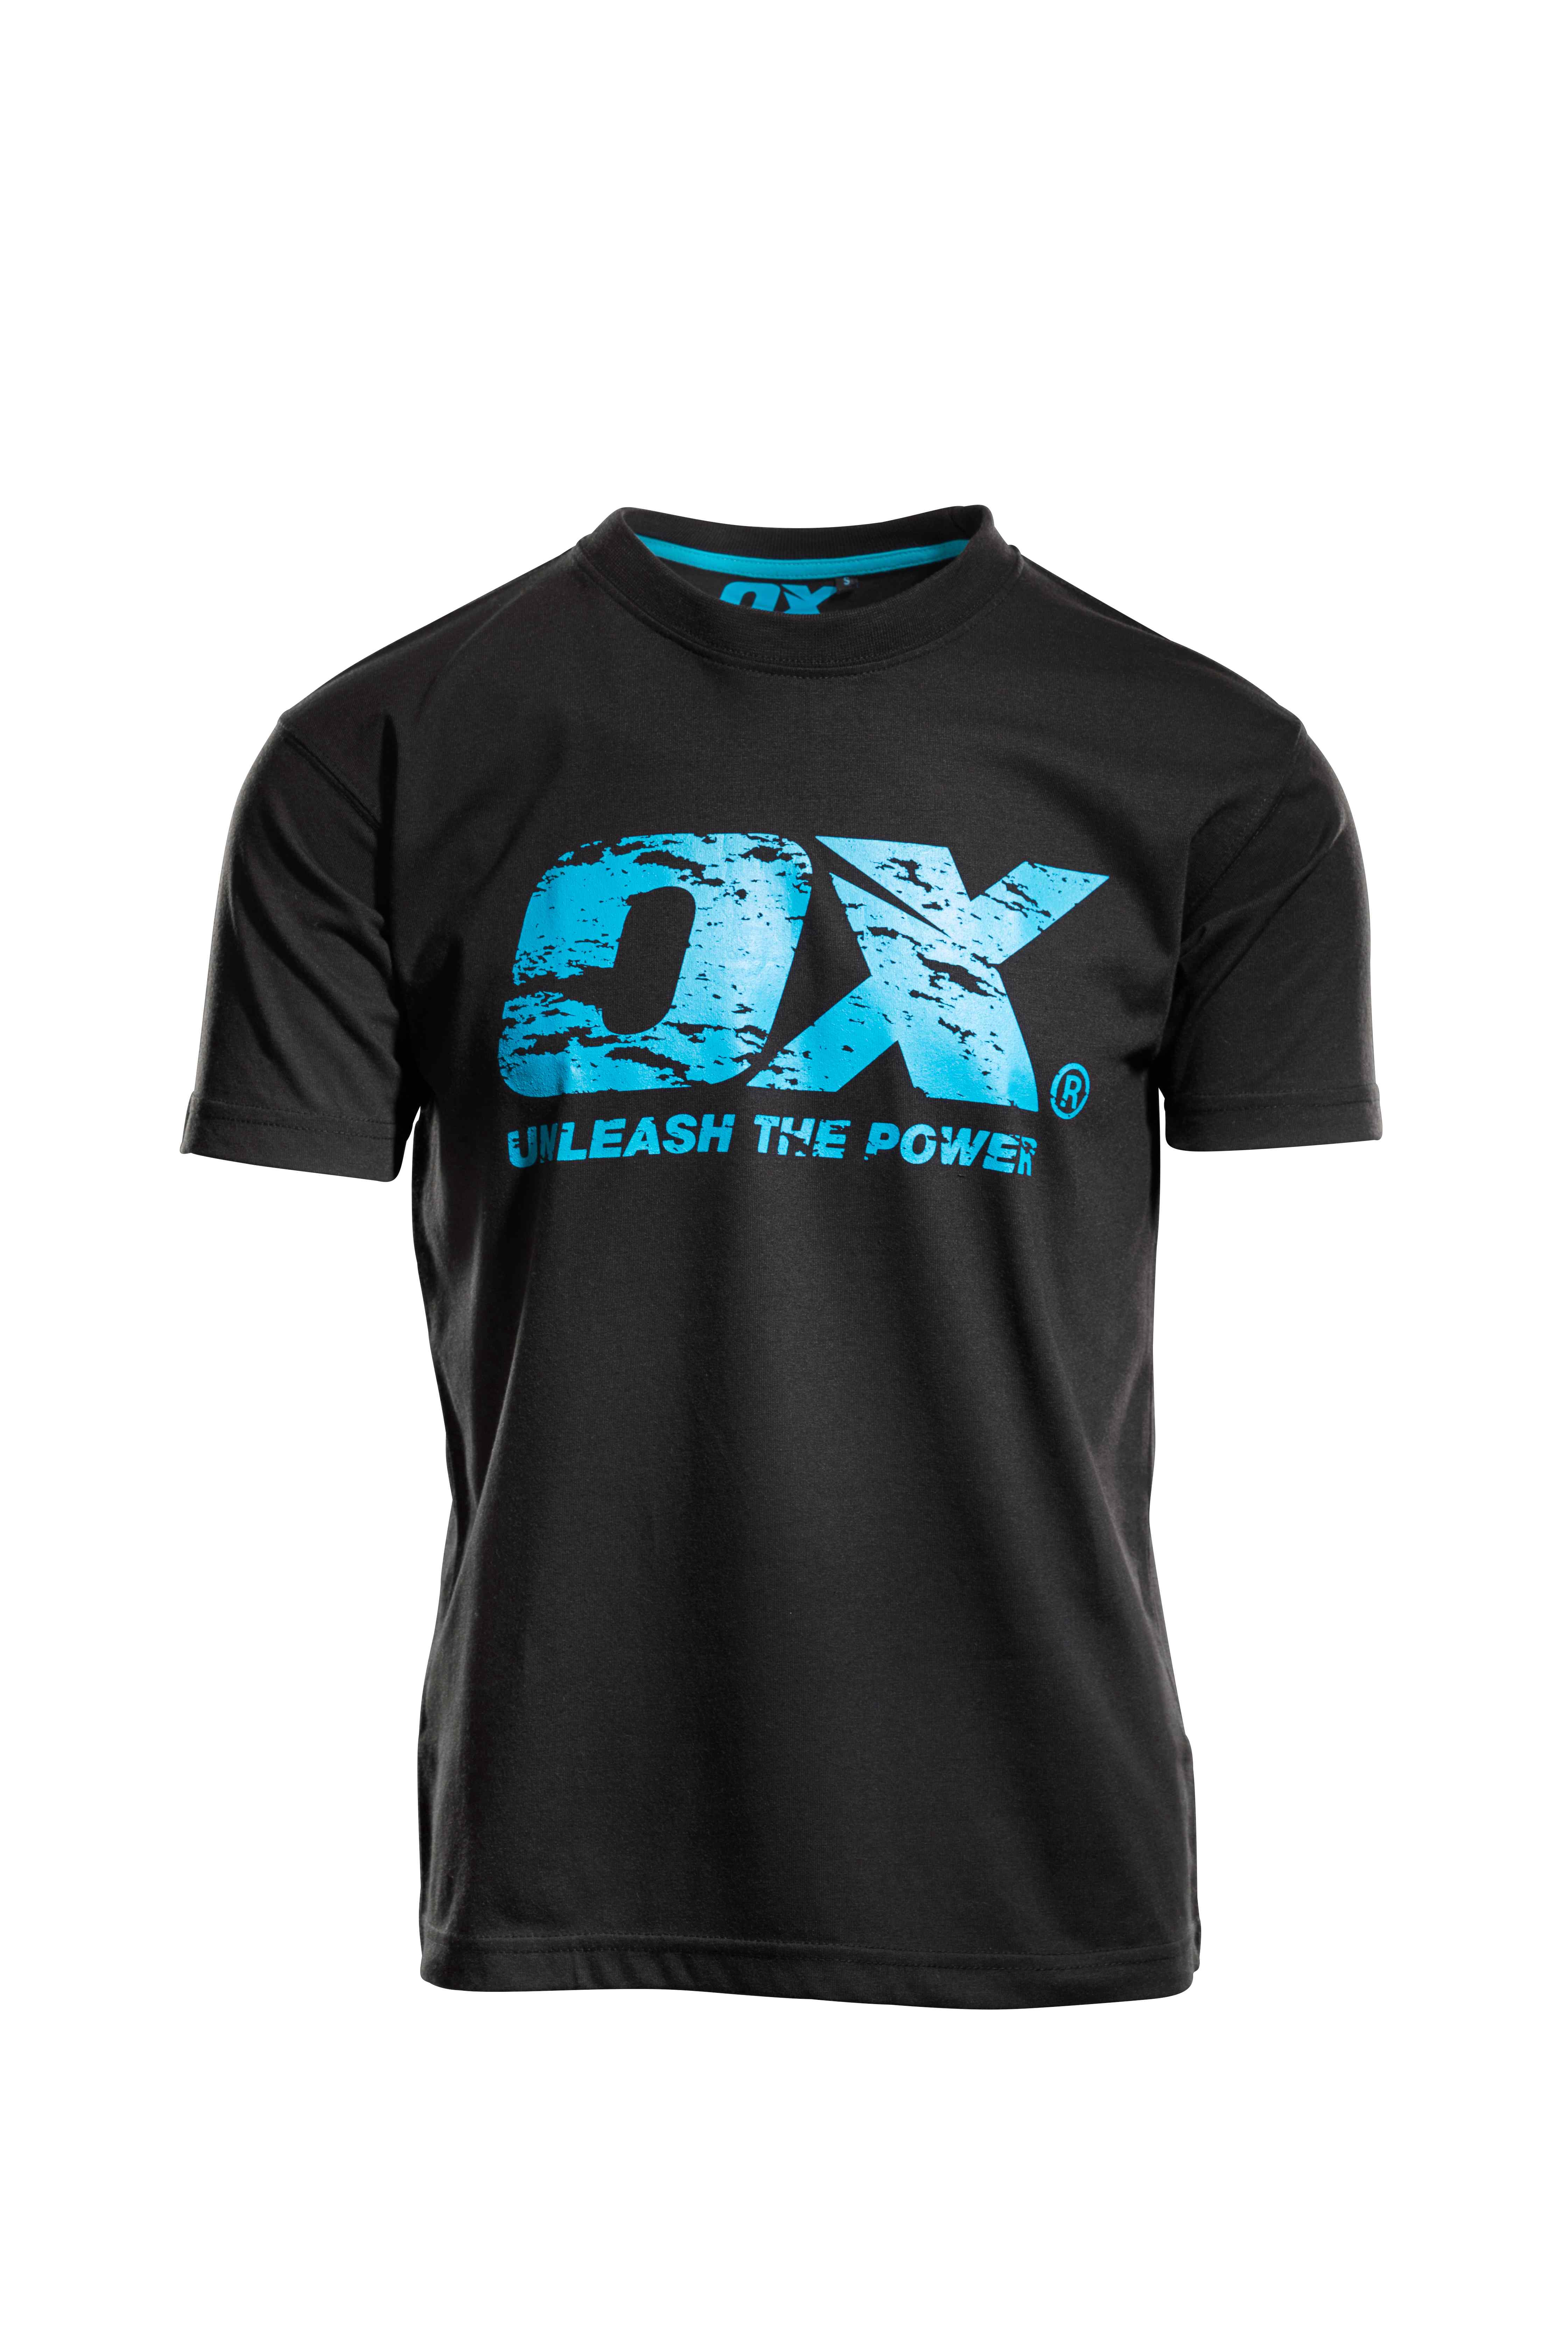 OX Crew Neck T shirt - XXL - Black